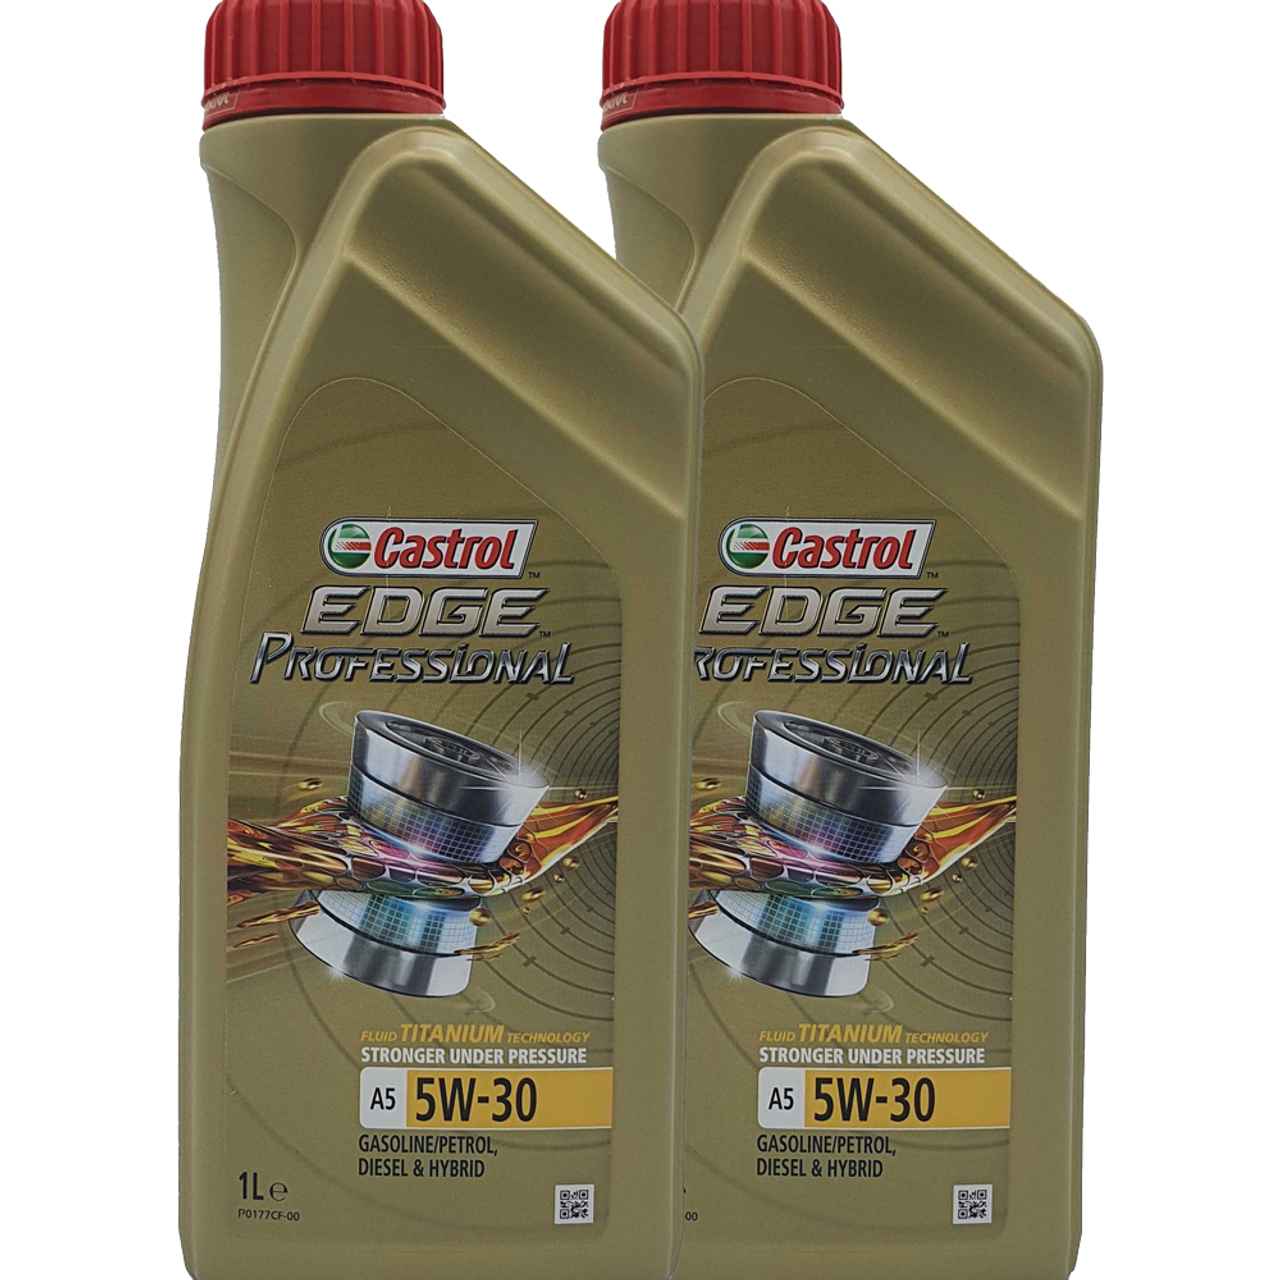 Castrol Edge Professional Fluid Titanium A5 5W-30 2x1 Liter